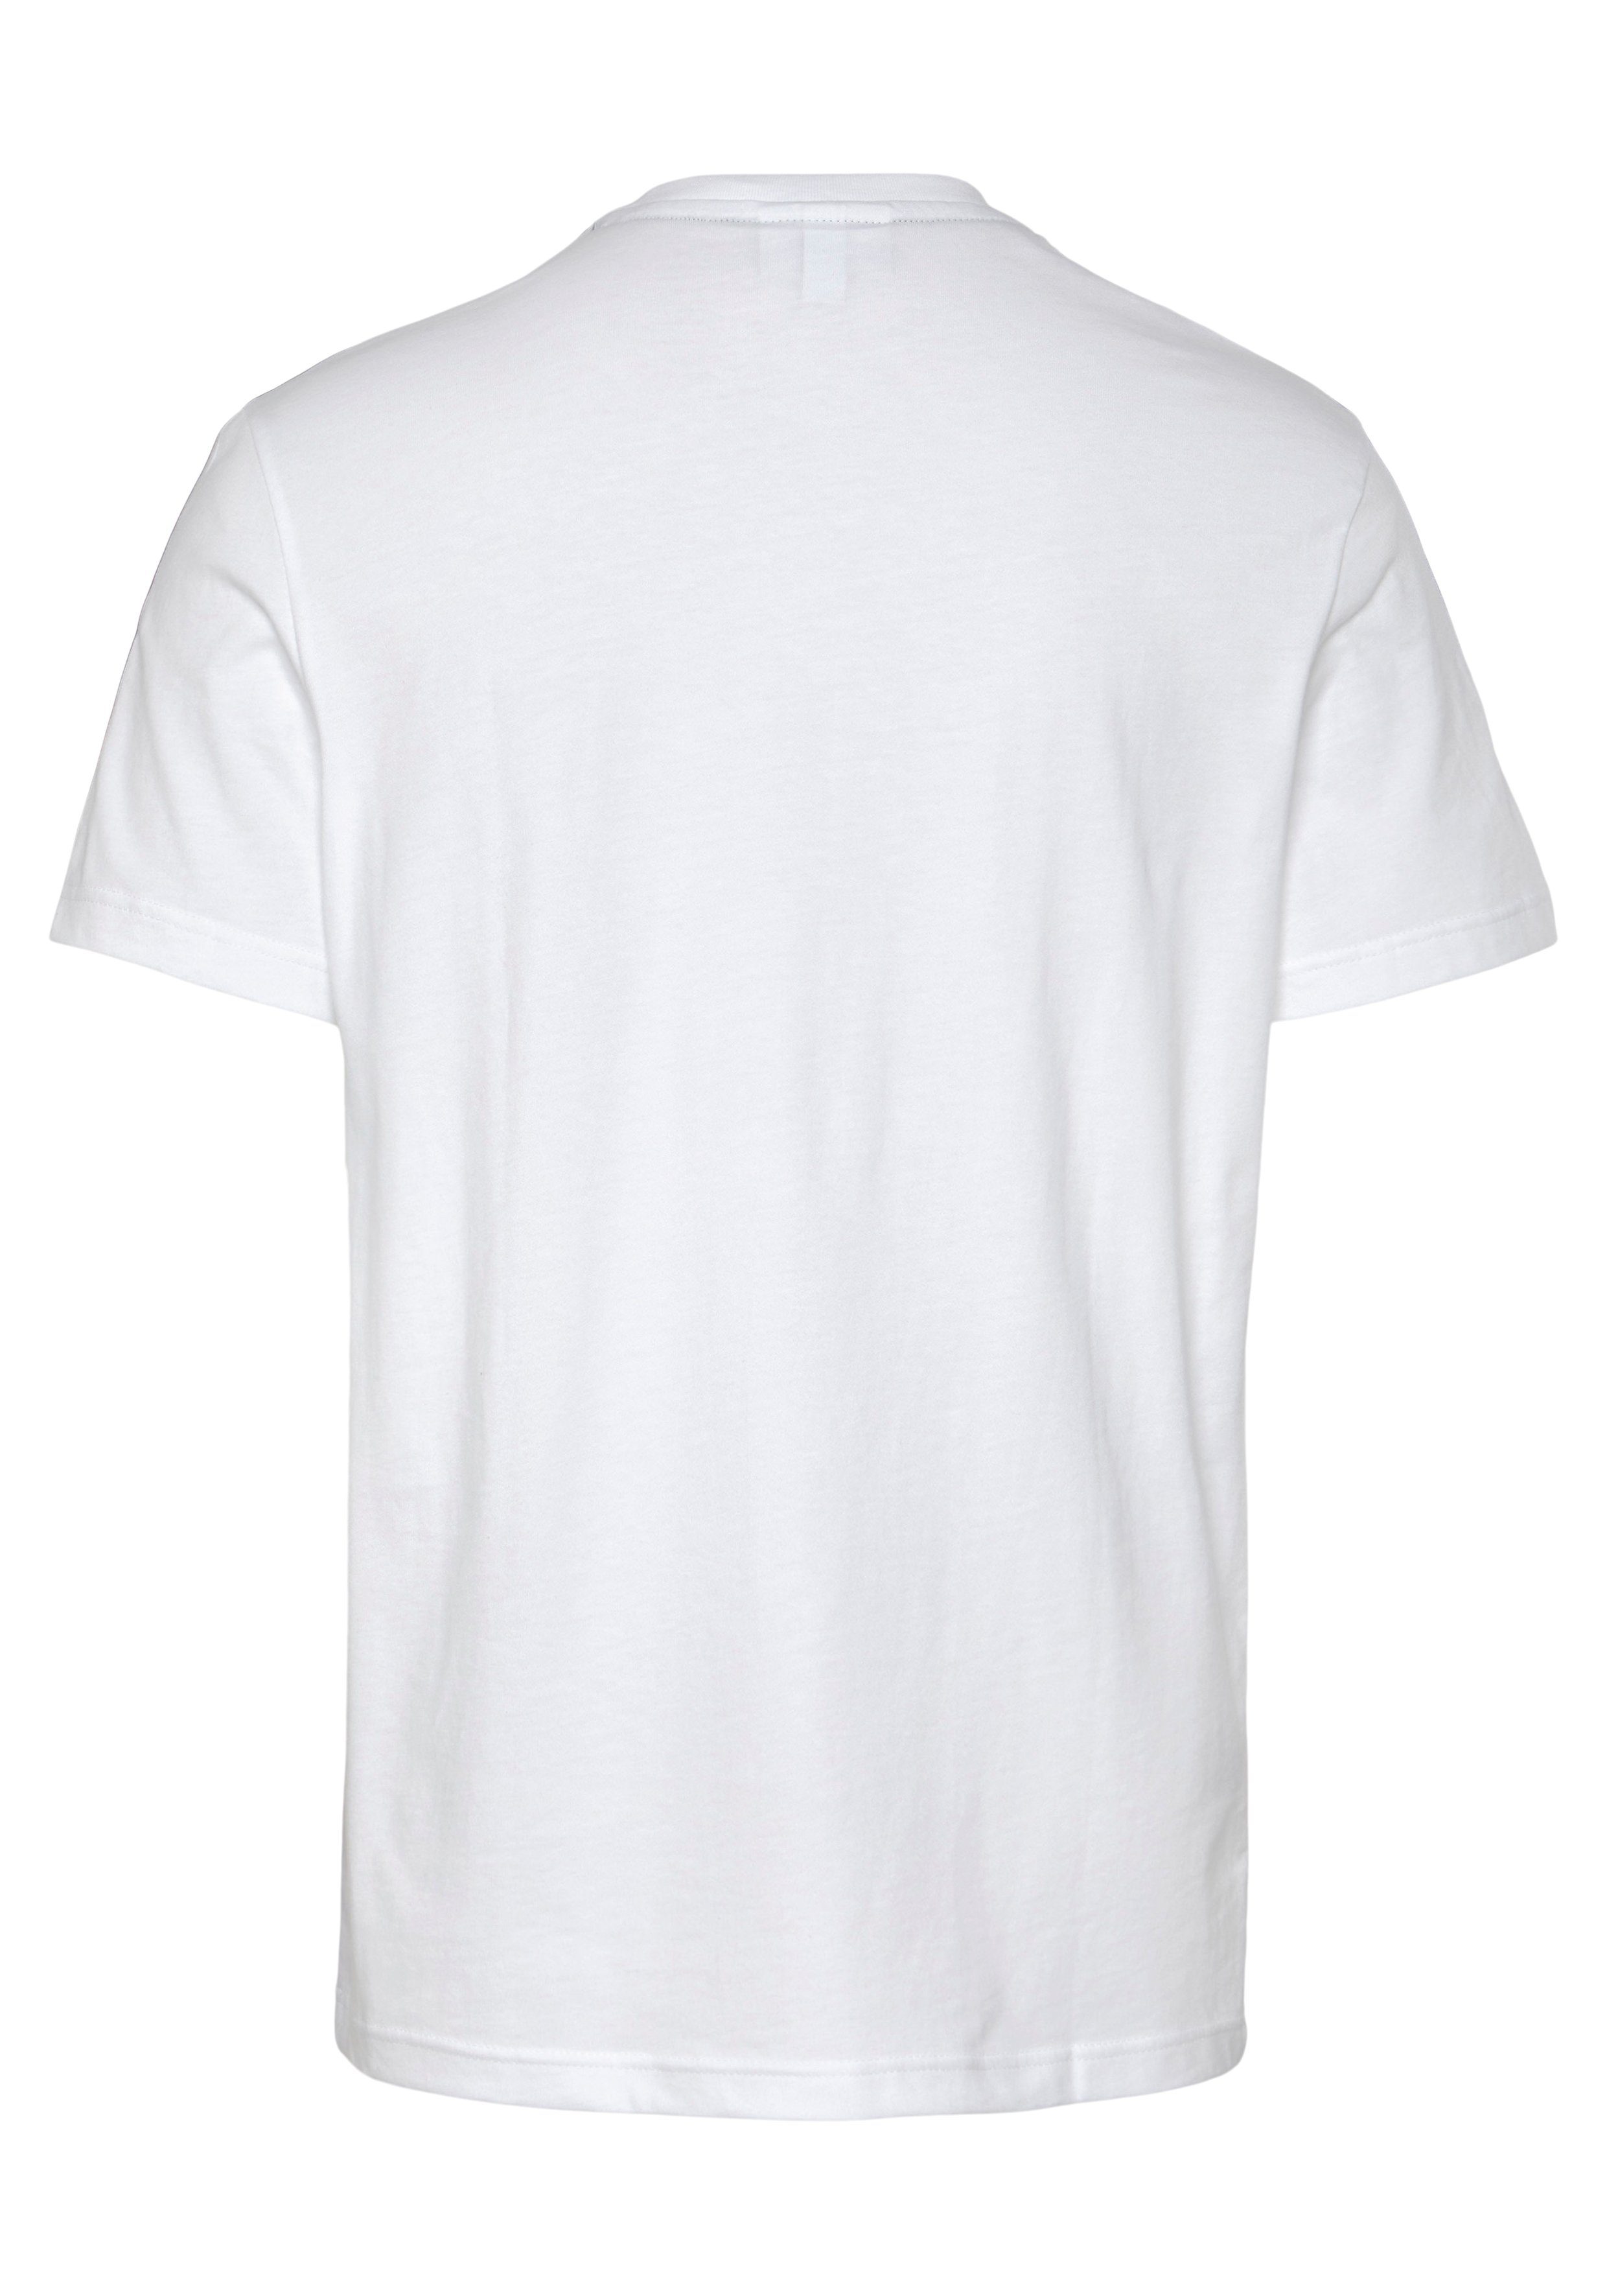 Kontrastband white T-Shirt den an Schultern mit Lacoste beschriftetem